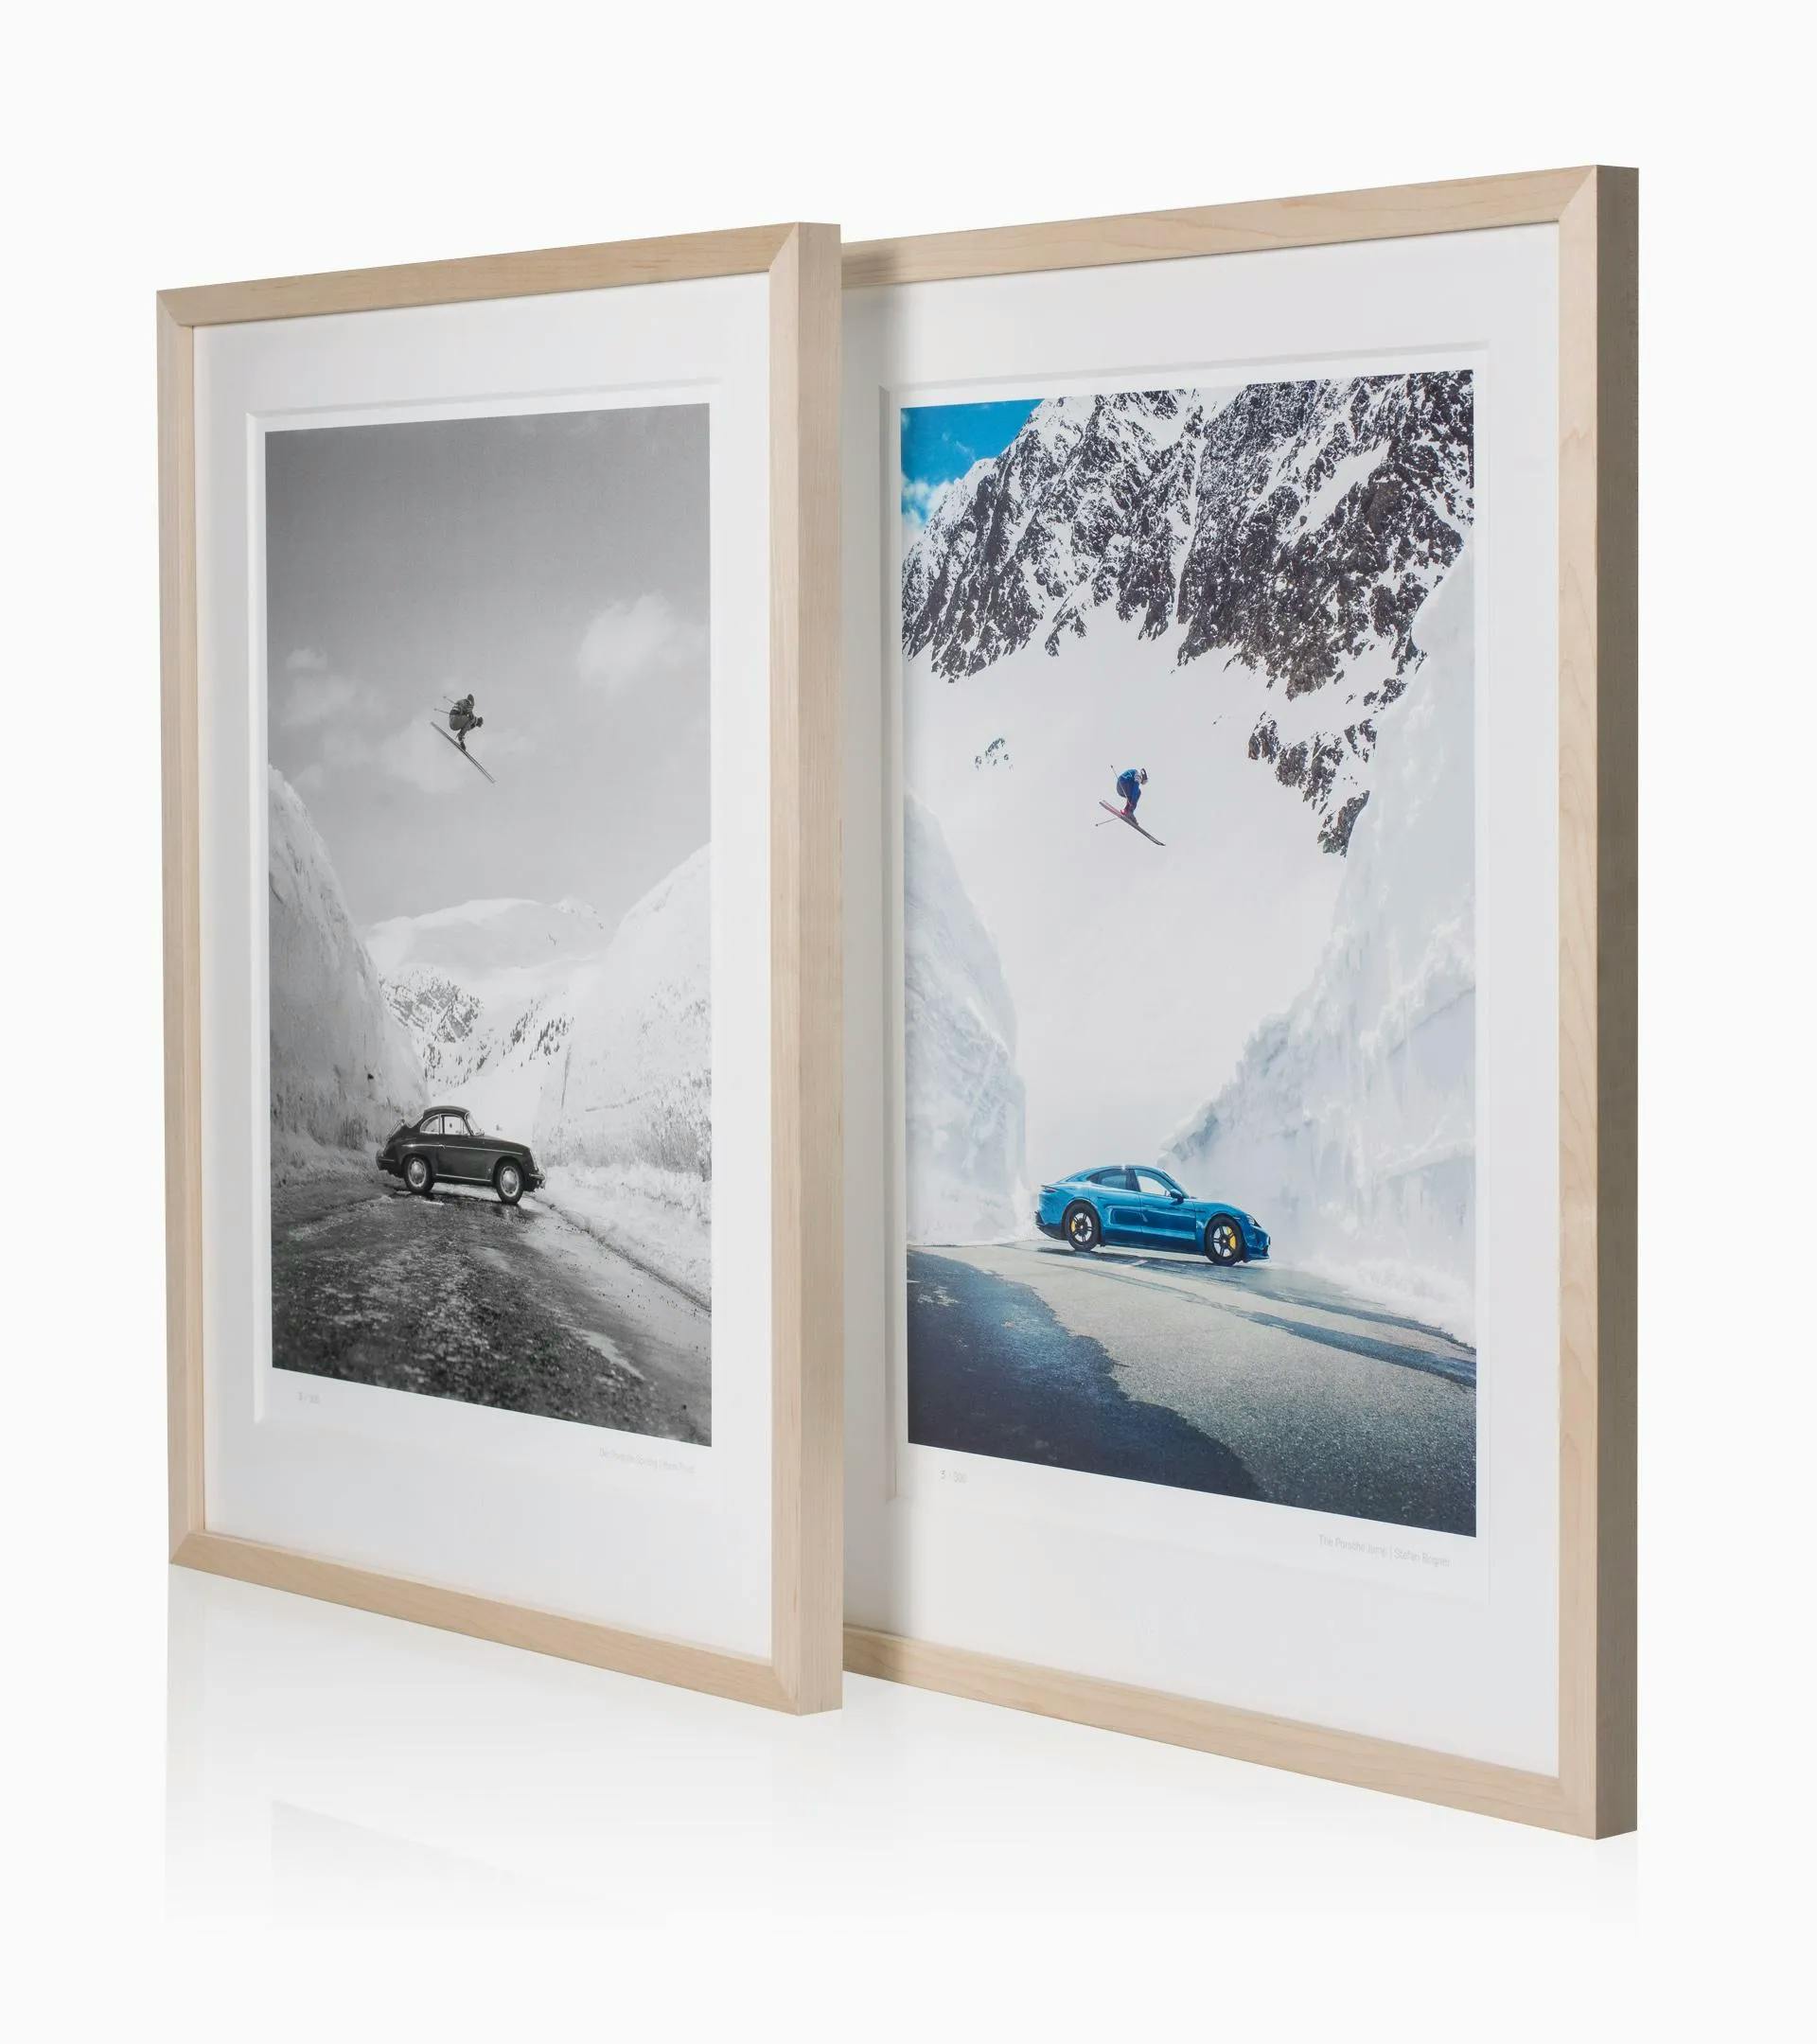 'The Porsche Jump' image set 7